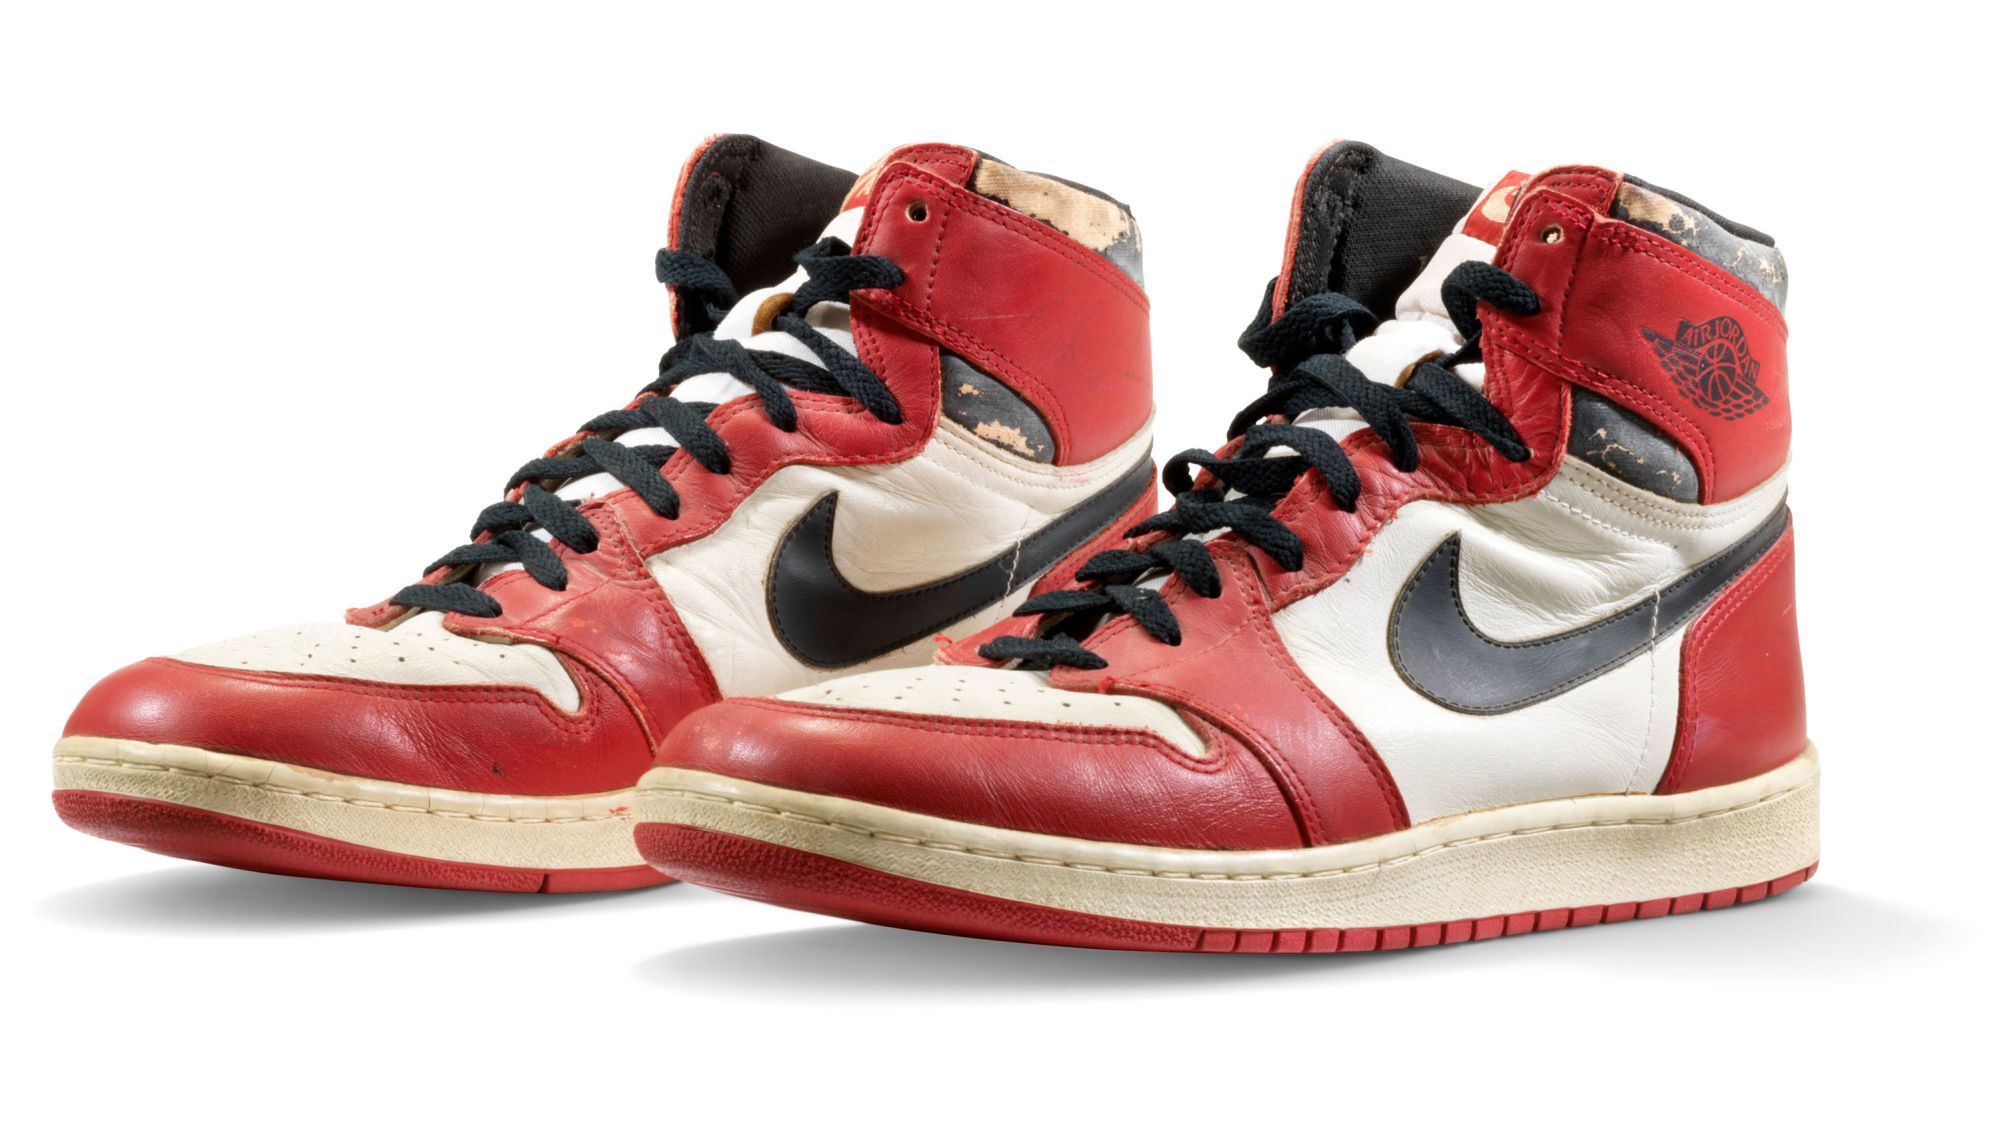 Michael Jordan's game-worn sneakers set new record, selling for $615,000 |  CNN